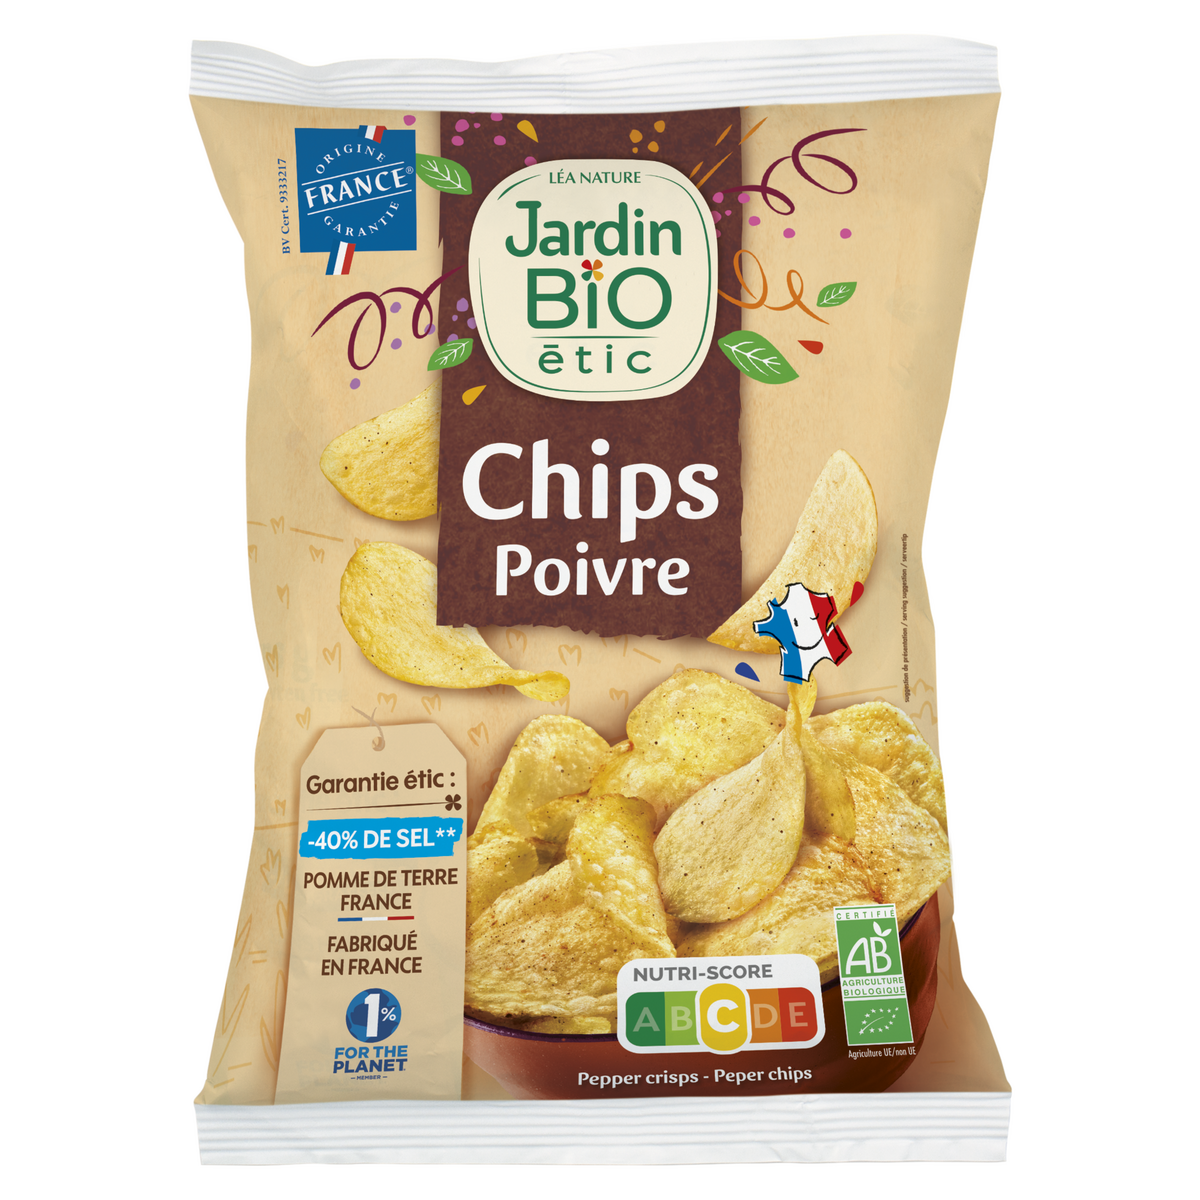 JARDIN BIO ETIC Chips poivre 100g